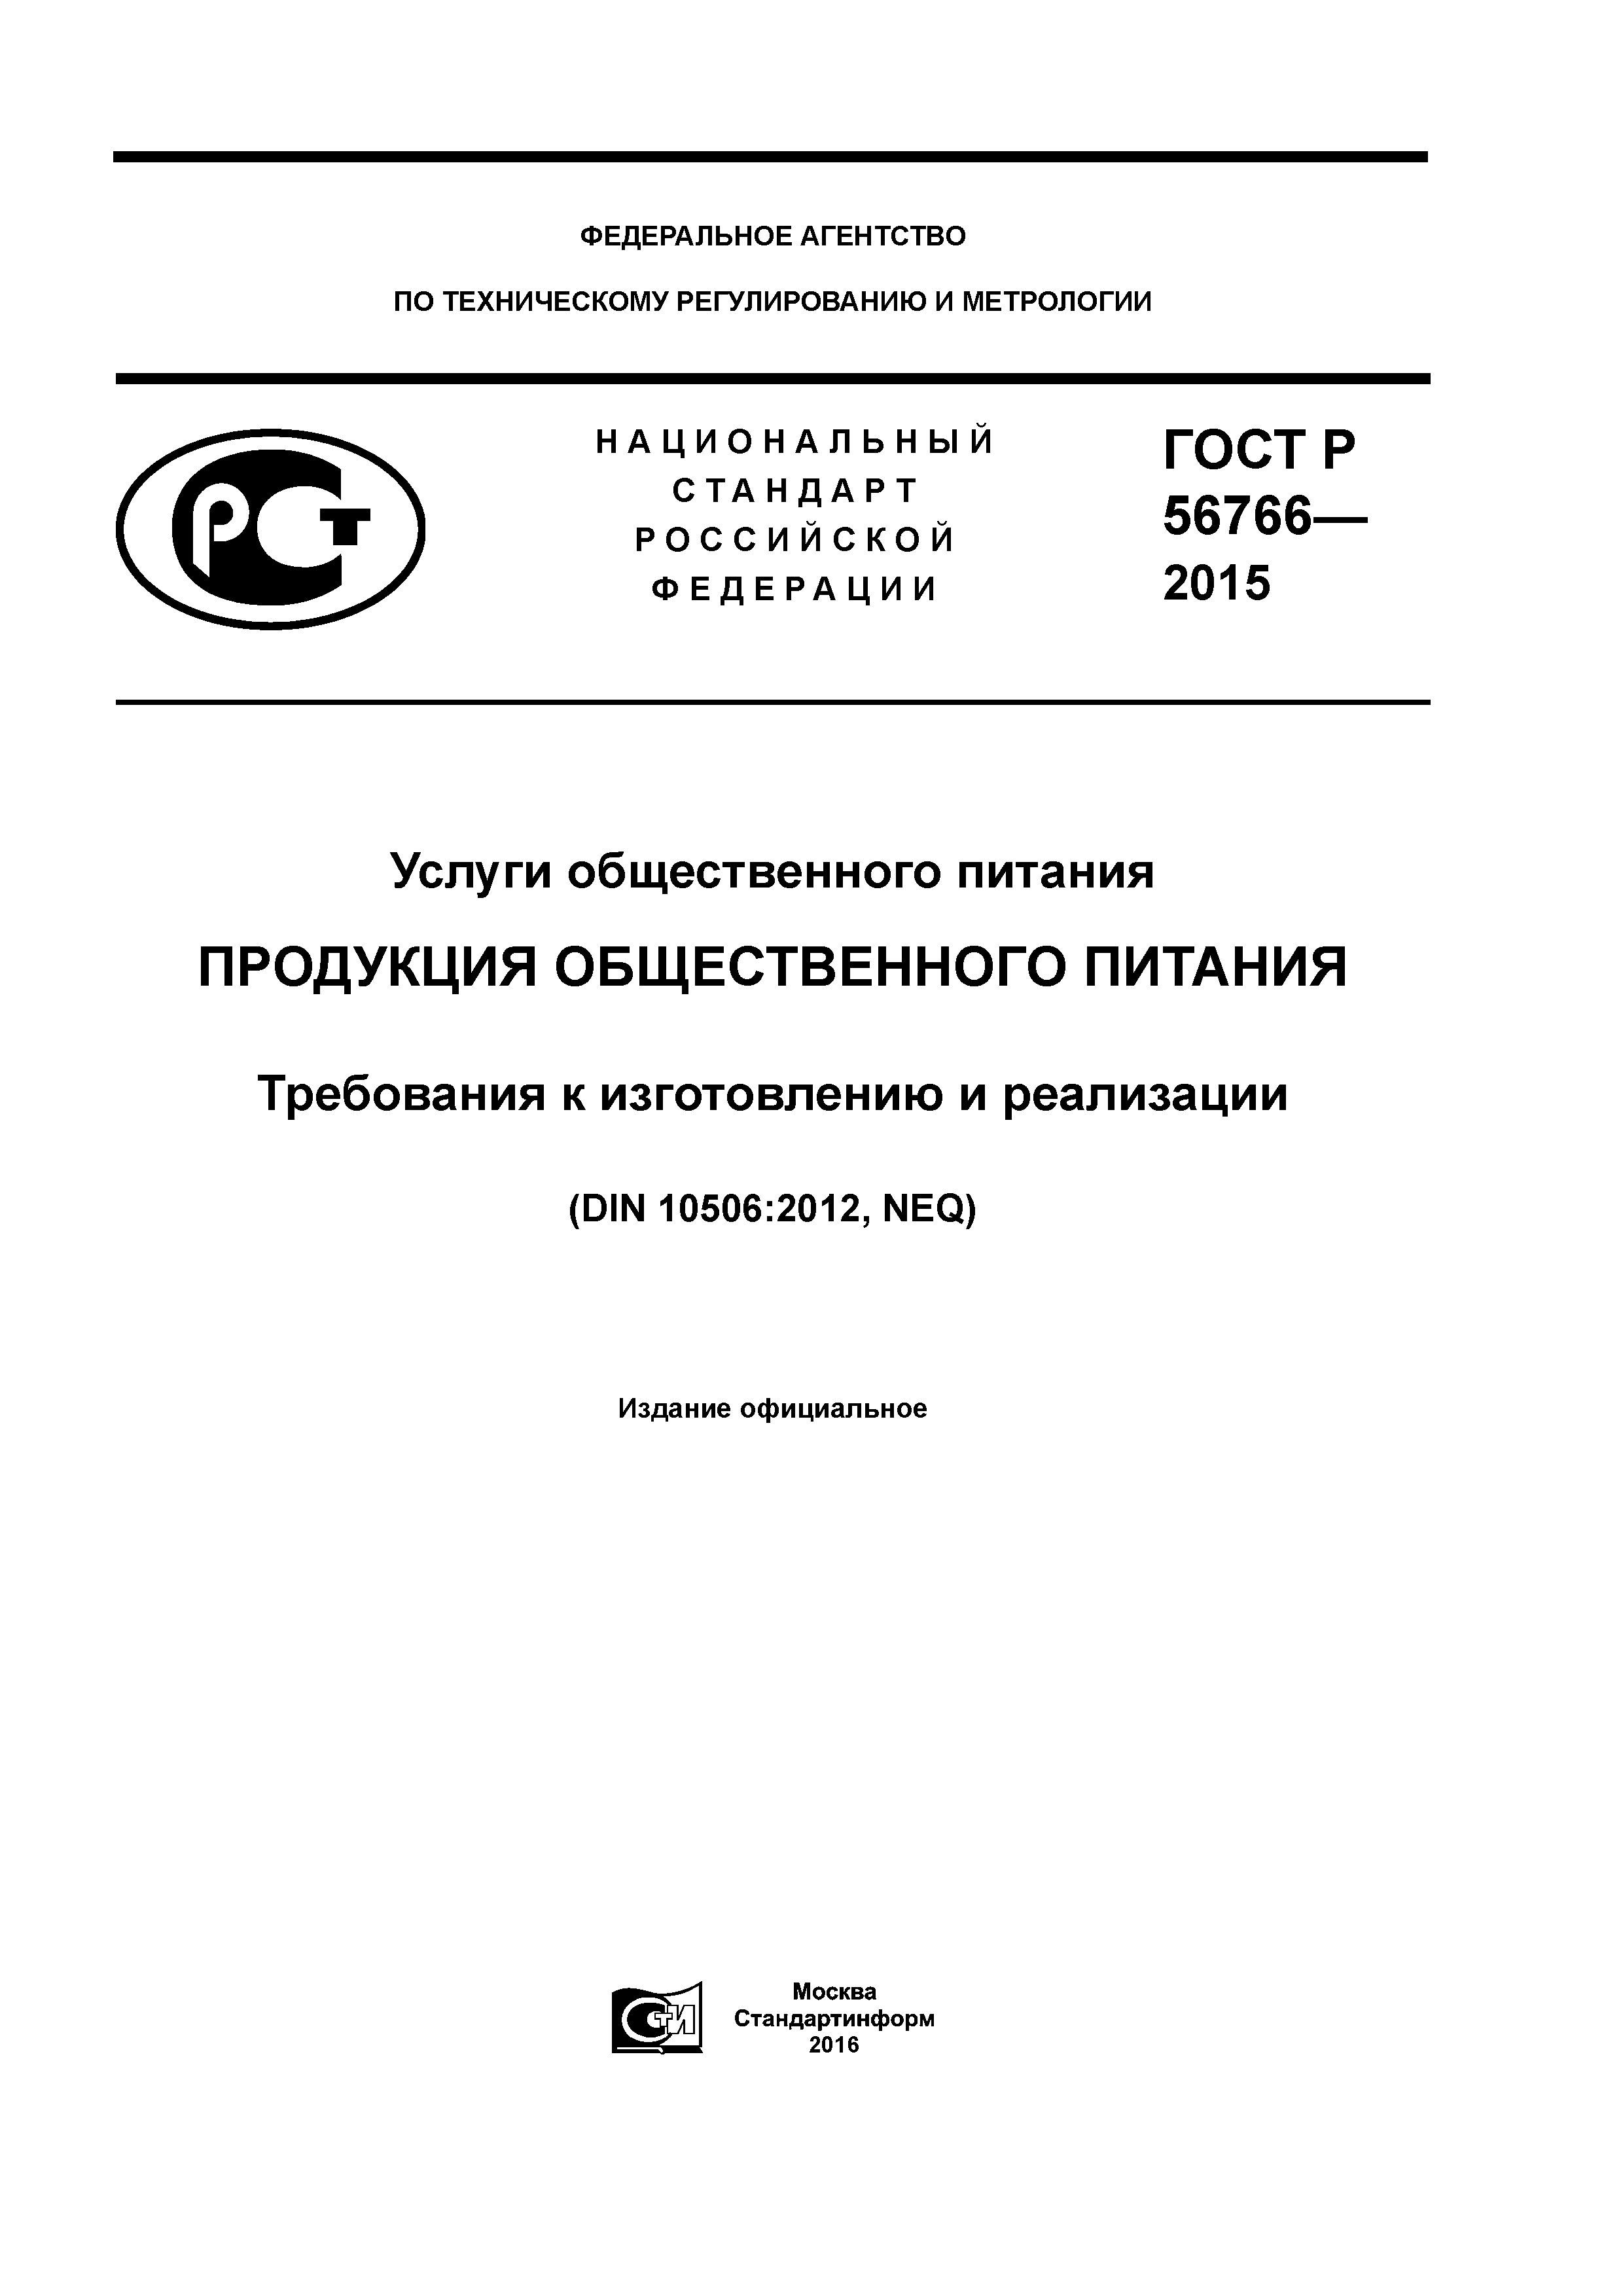 ГОСТ Р 56766-2015